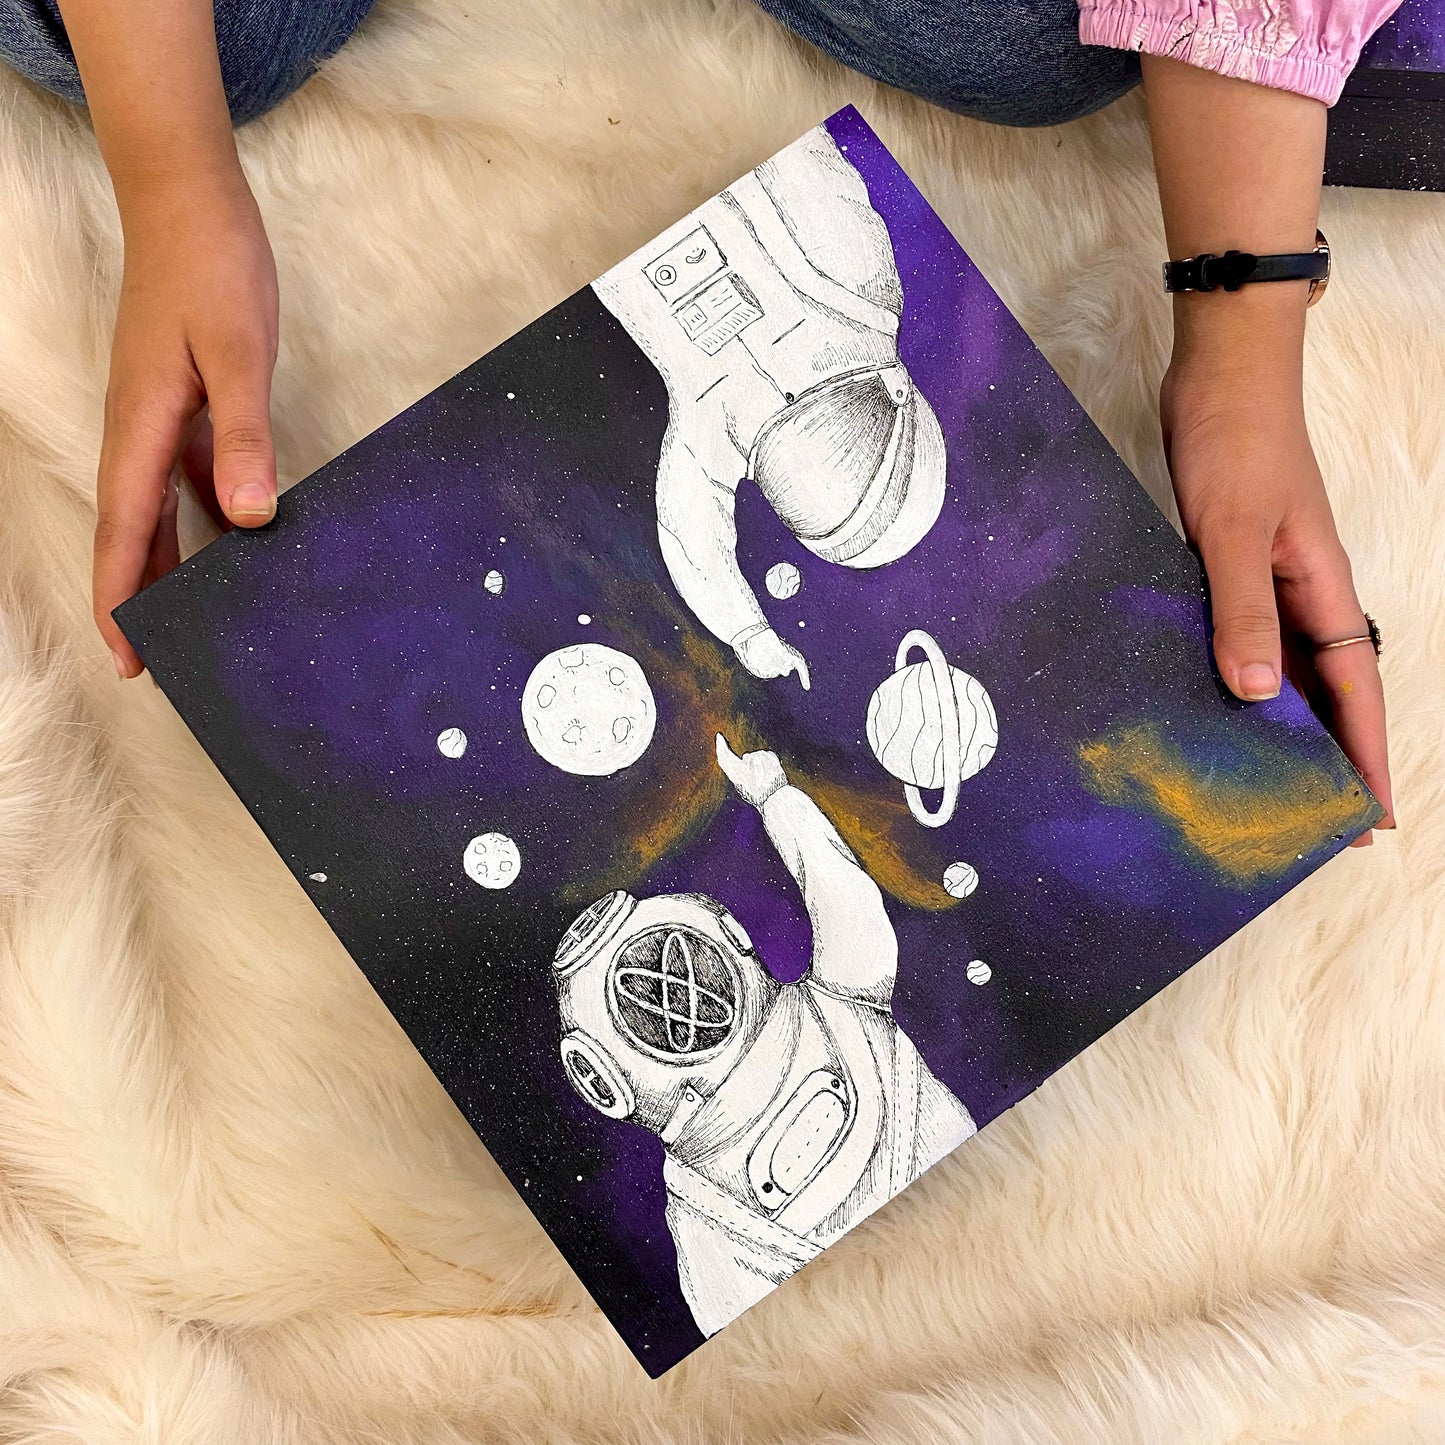 Box Galaxy with Sketch "Astronaut".